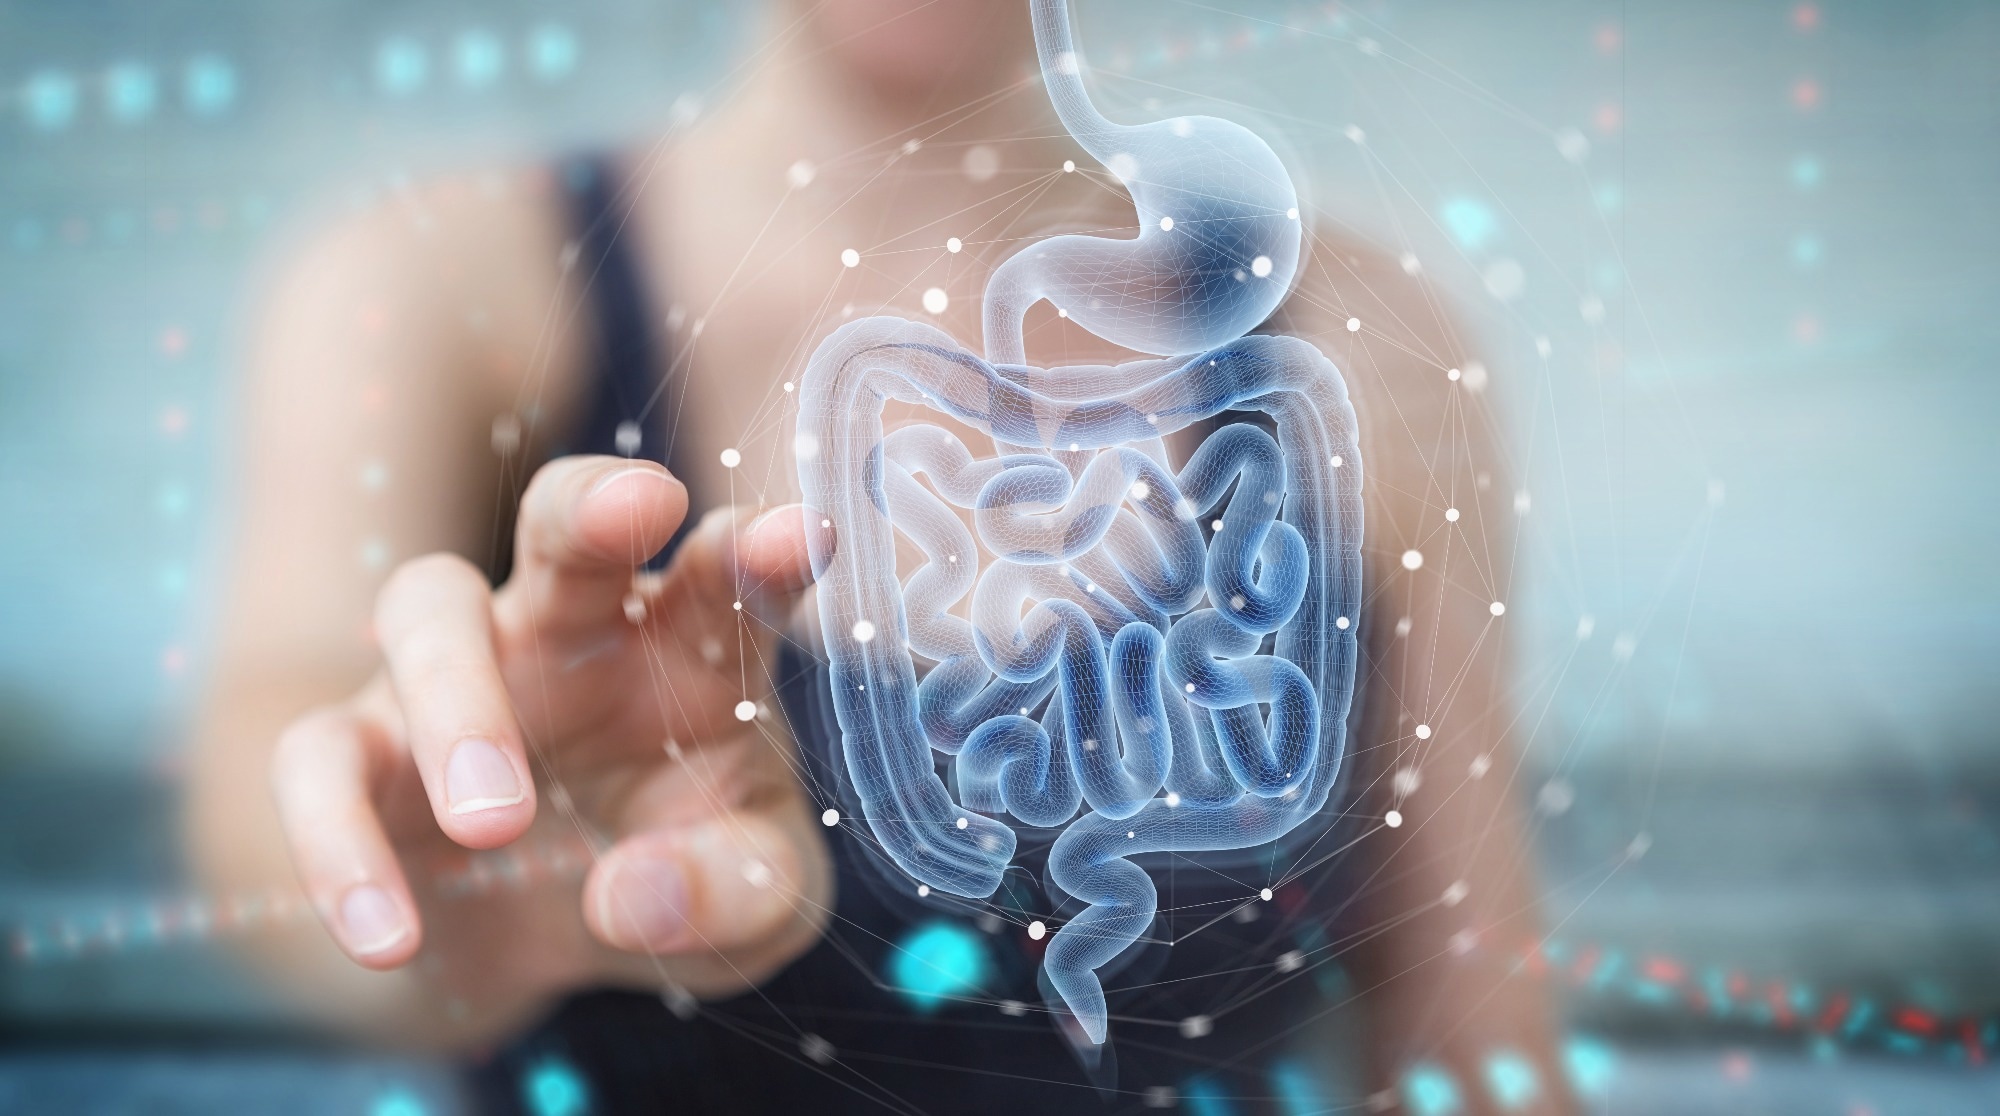 Study: Cross-talk between the gut microbiota and hypothyroidism: a bidirectional two-sample Mendelian randomization study. Image Credit: sdecoret/Shutterstock.com